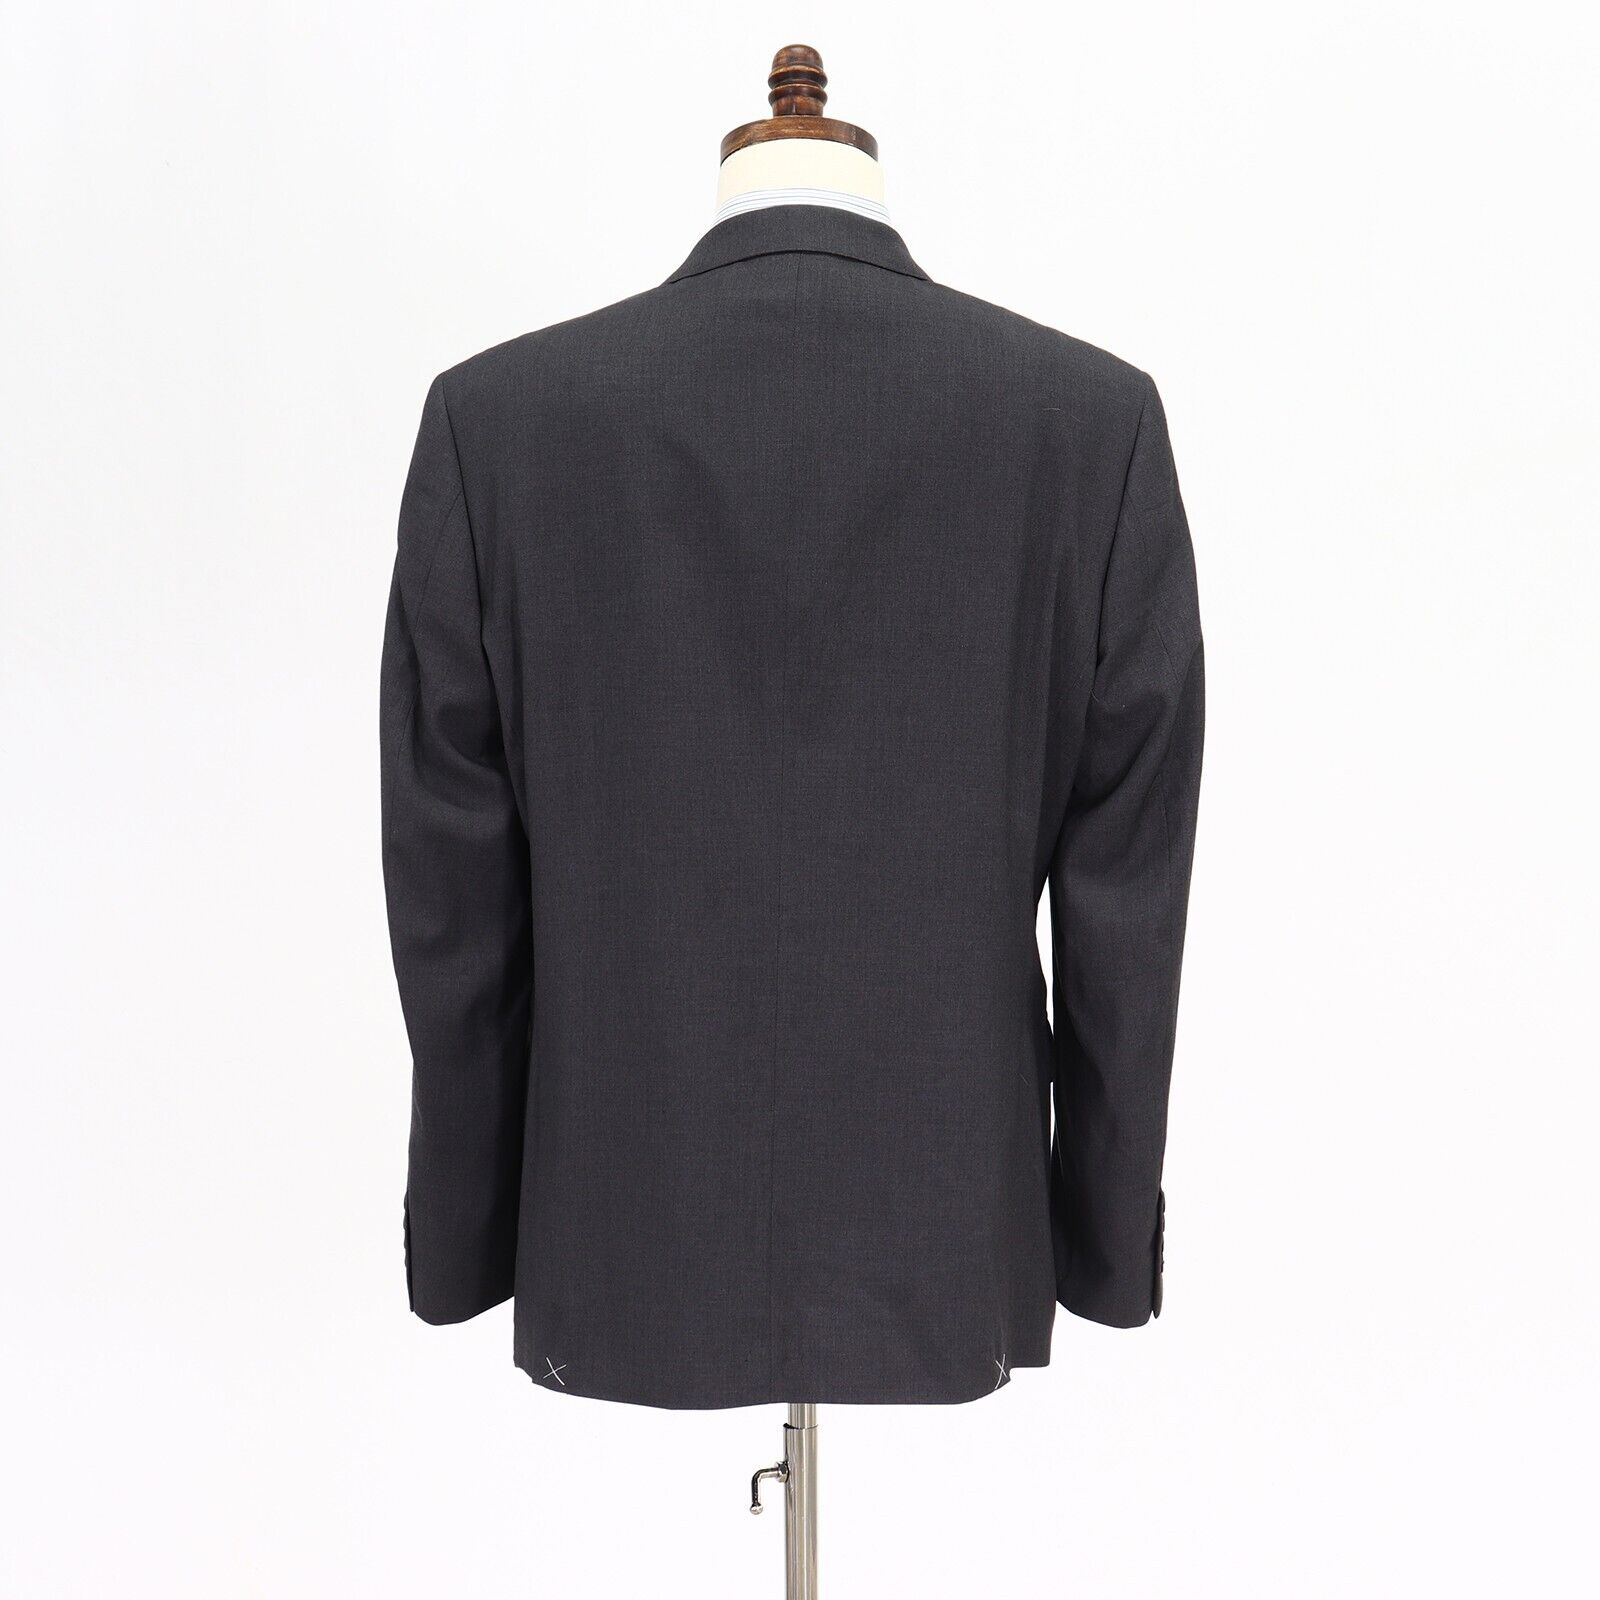 Perry Ellis 44R Gray Sport Coat Blazer Jacket Solid 2B Polyester | eBay